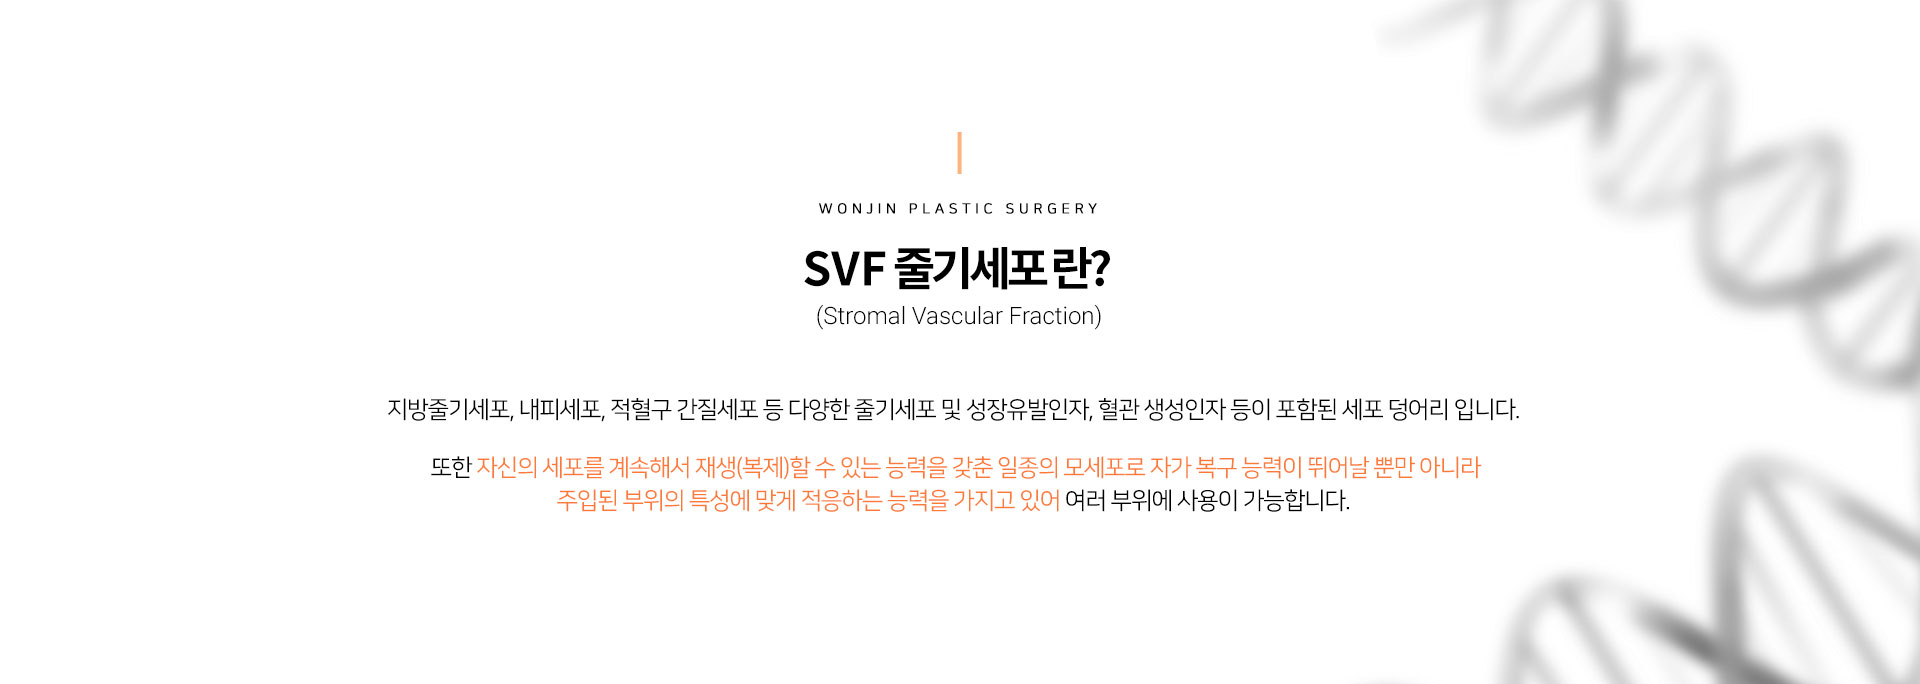 SVF 줄기세포 란?
		(Stromal Vascular Fraction)
		지방줄기세포, 내피세포, 적혈구 간질세포 등 다양한 줄기세포 및 성장유발인자, 혈관 생성인자 등이 포함된 세포 덩어리 입니다. 

		또한 자신의 세포를 계속해서 재생(복제)할 수 있는 능력을 갖춘 일종의 모세포로 자가 복구 능력이 뛰어날 뿐만 아니라
		주입된 부위의 특성에 맞게 적응하는 능력을 가지고 있어 여러 부위에 사용이 가능합니다. 

		